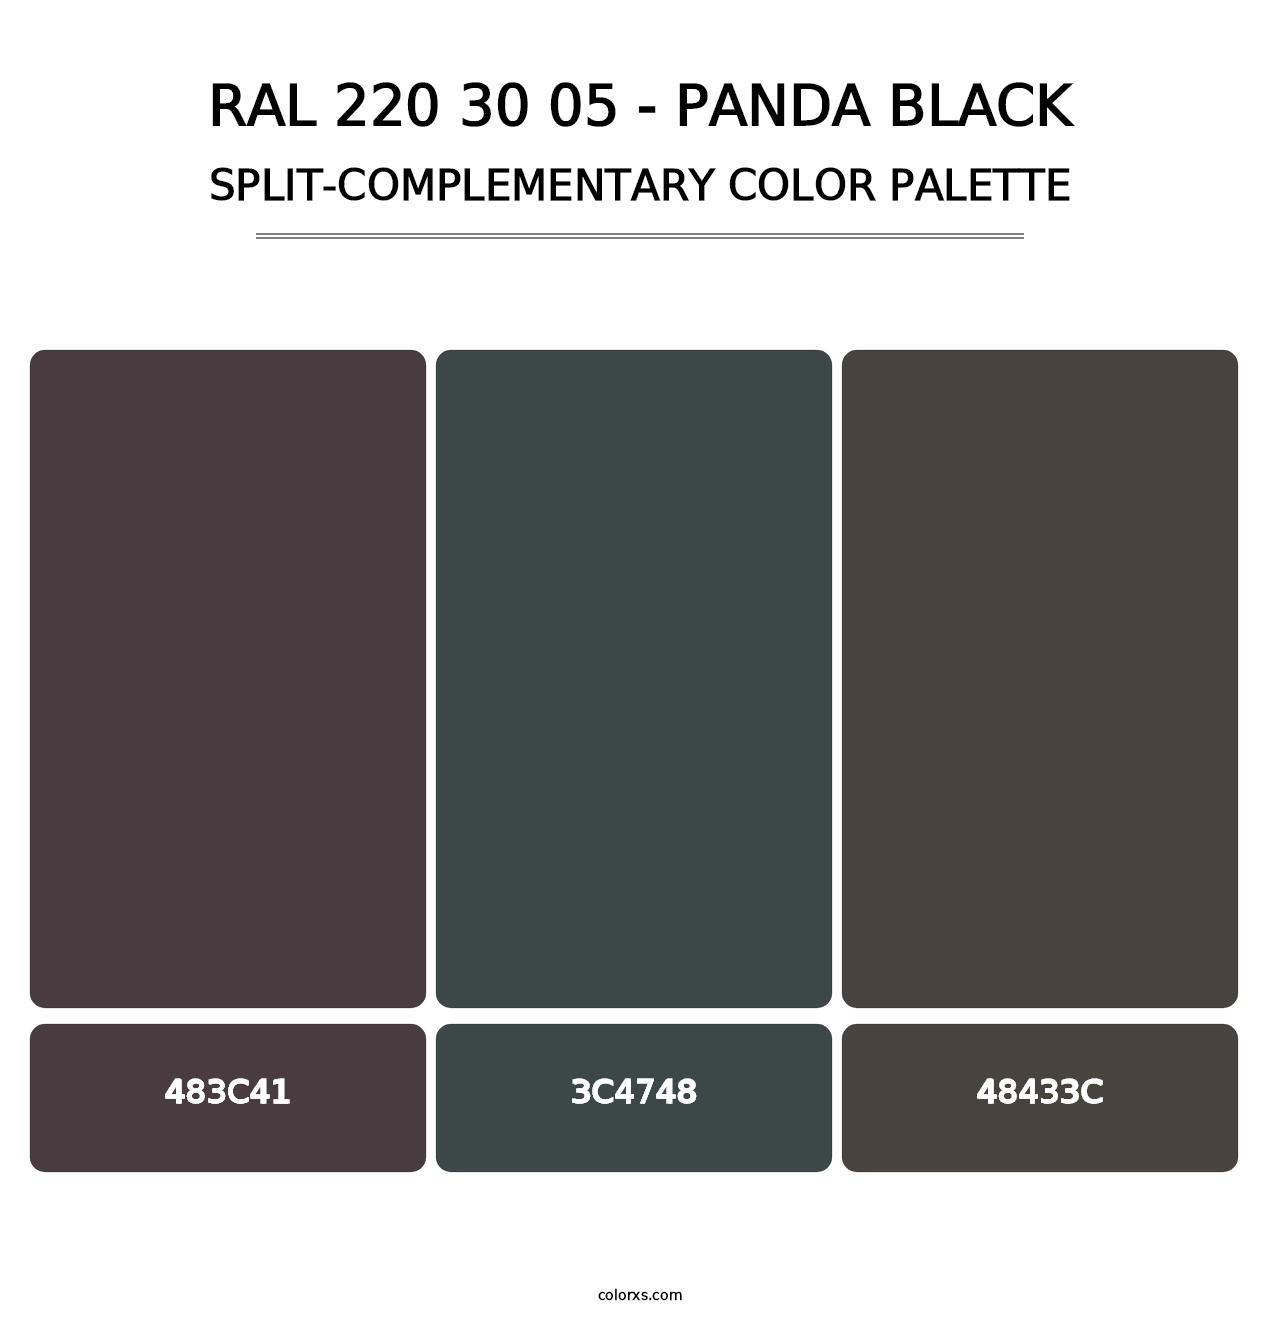 RAL 220 30 05 - Panda Black - Split-Complementary Color Palette